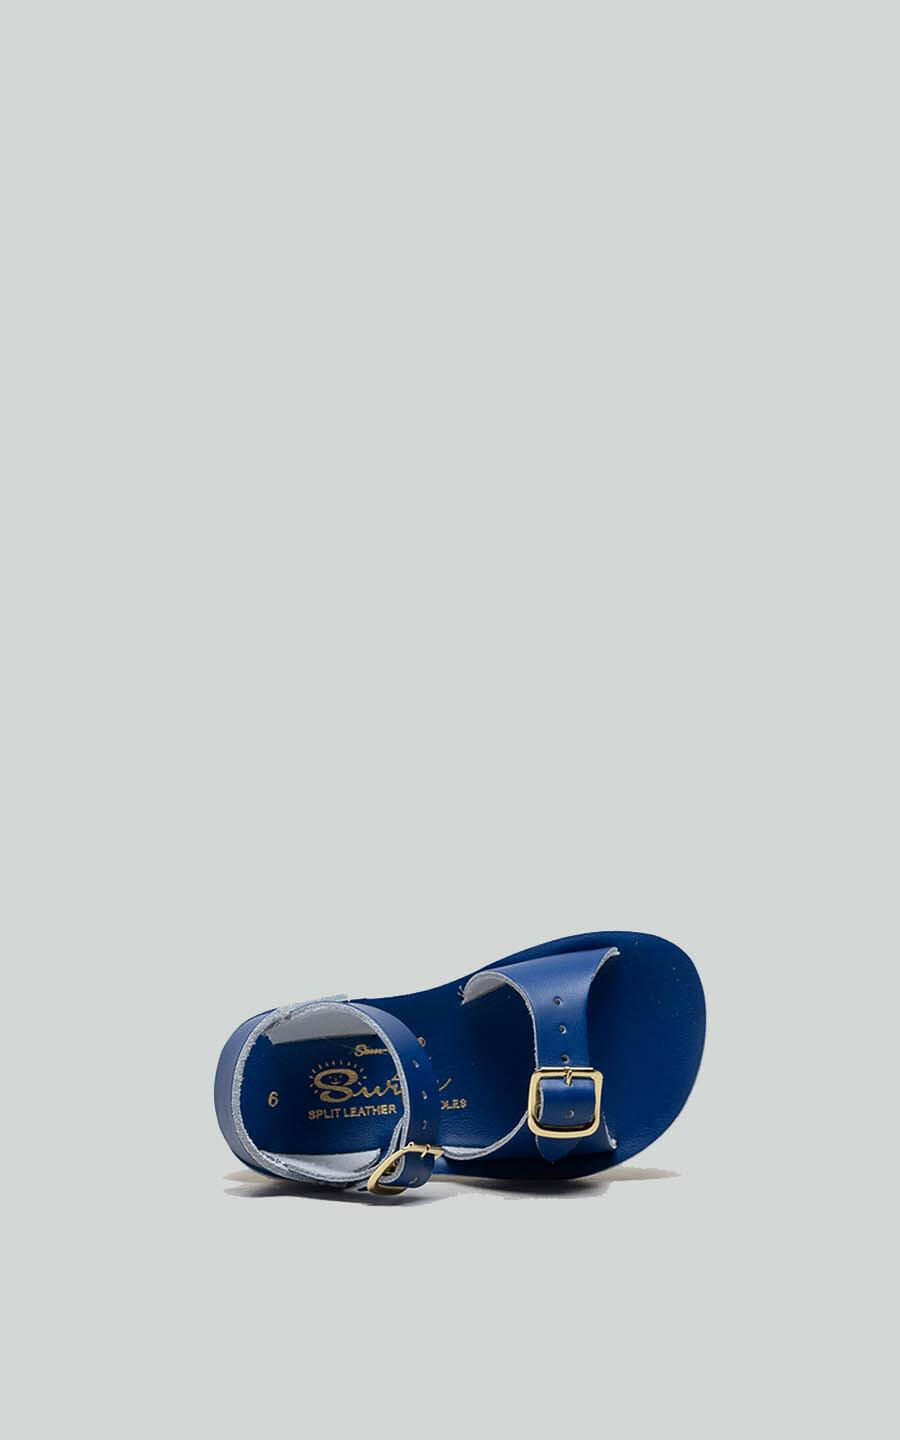 Blauw Sandaal image